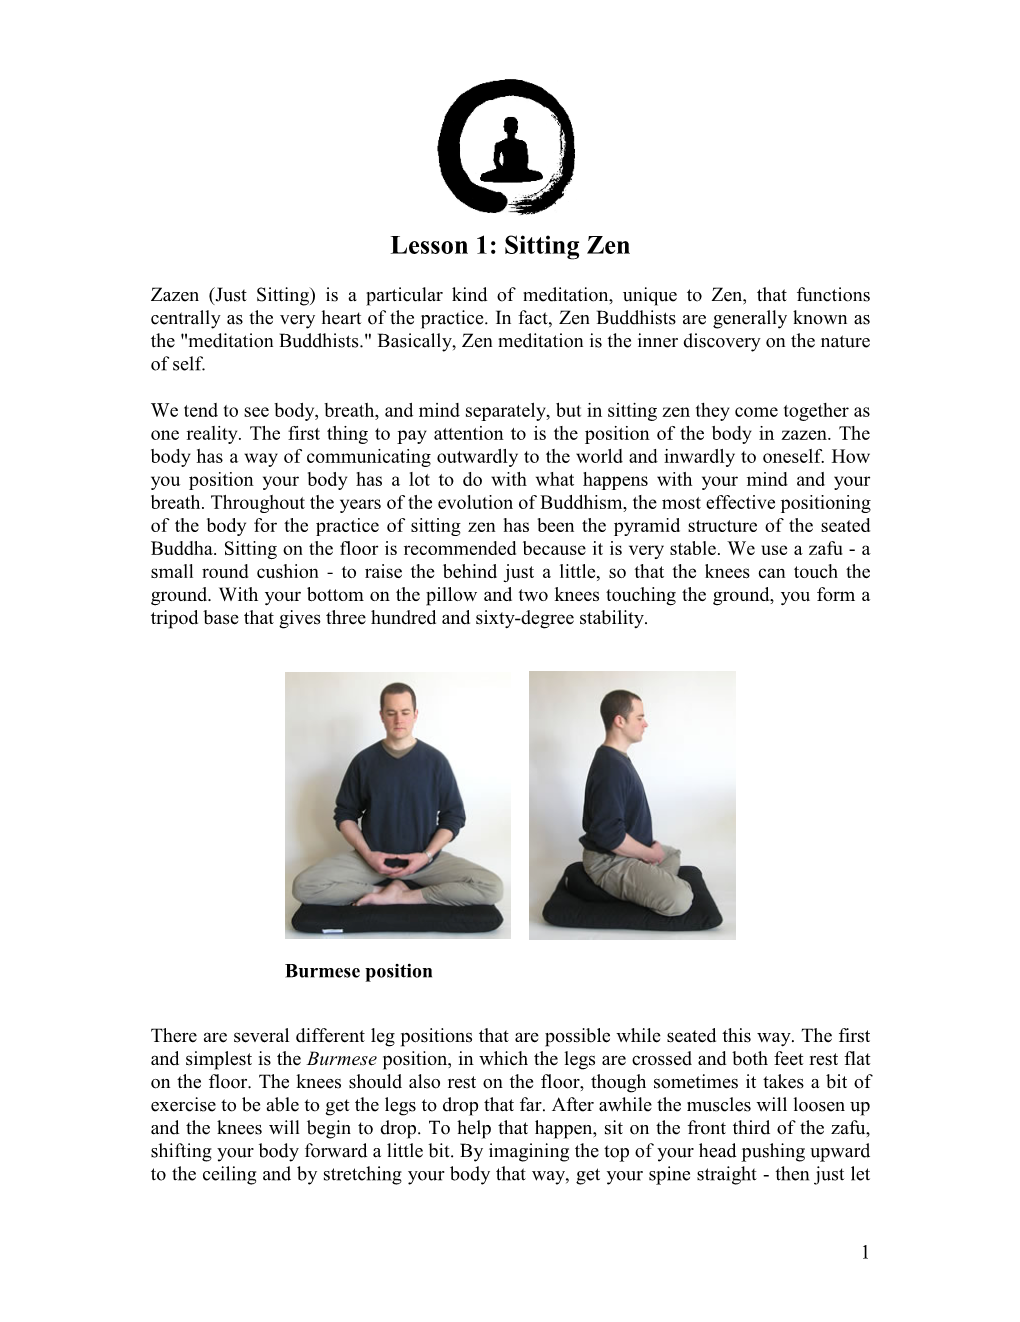 Zazen Is a Particular Kind of Meditation, Unique to Zen, That Functions